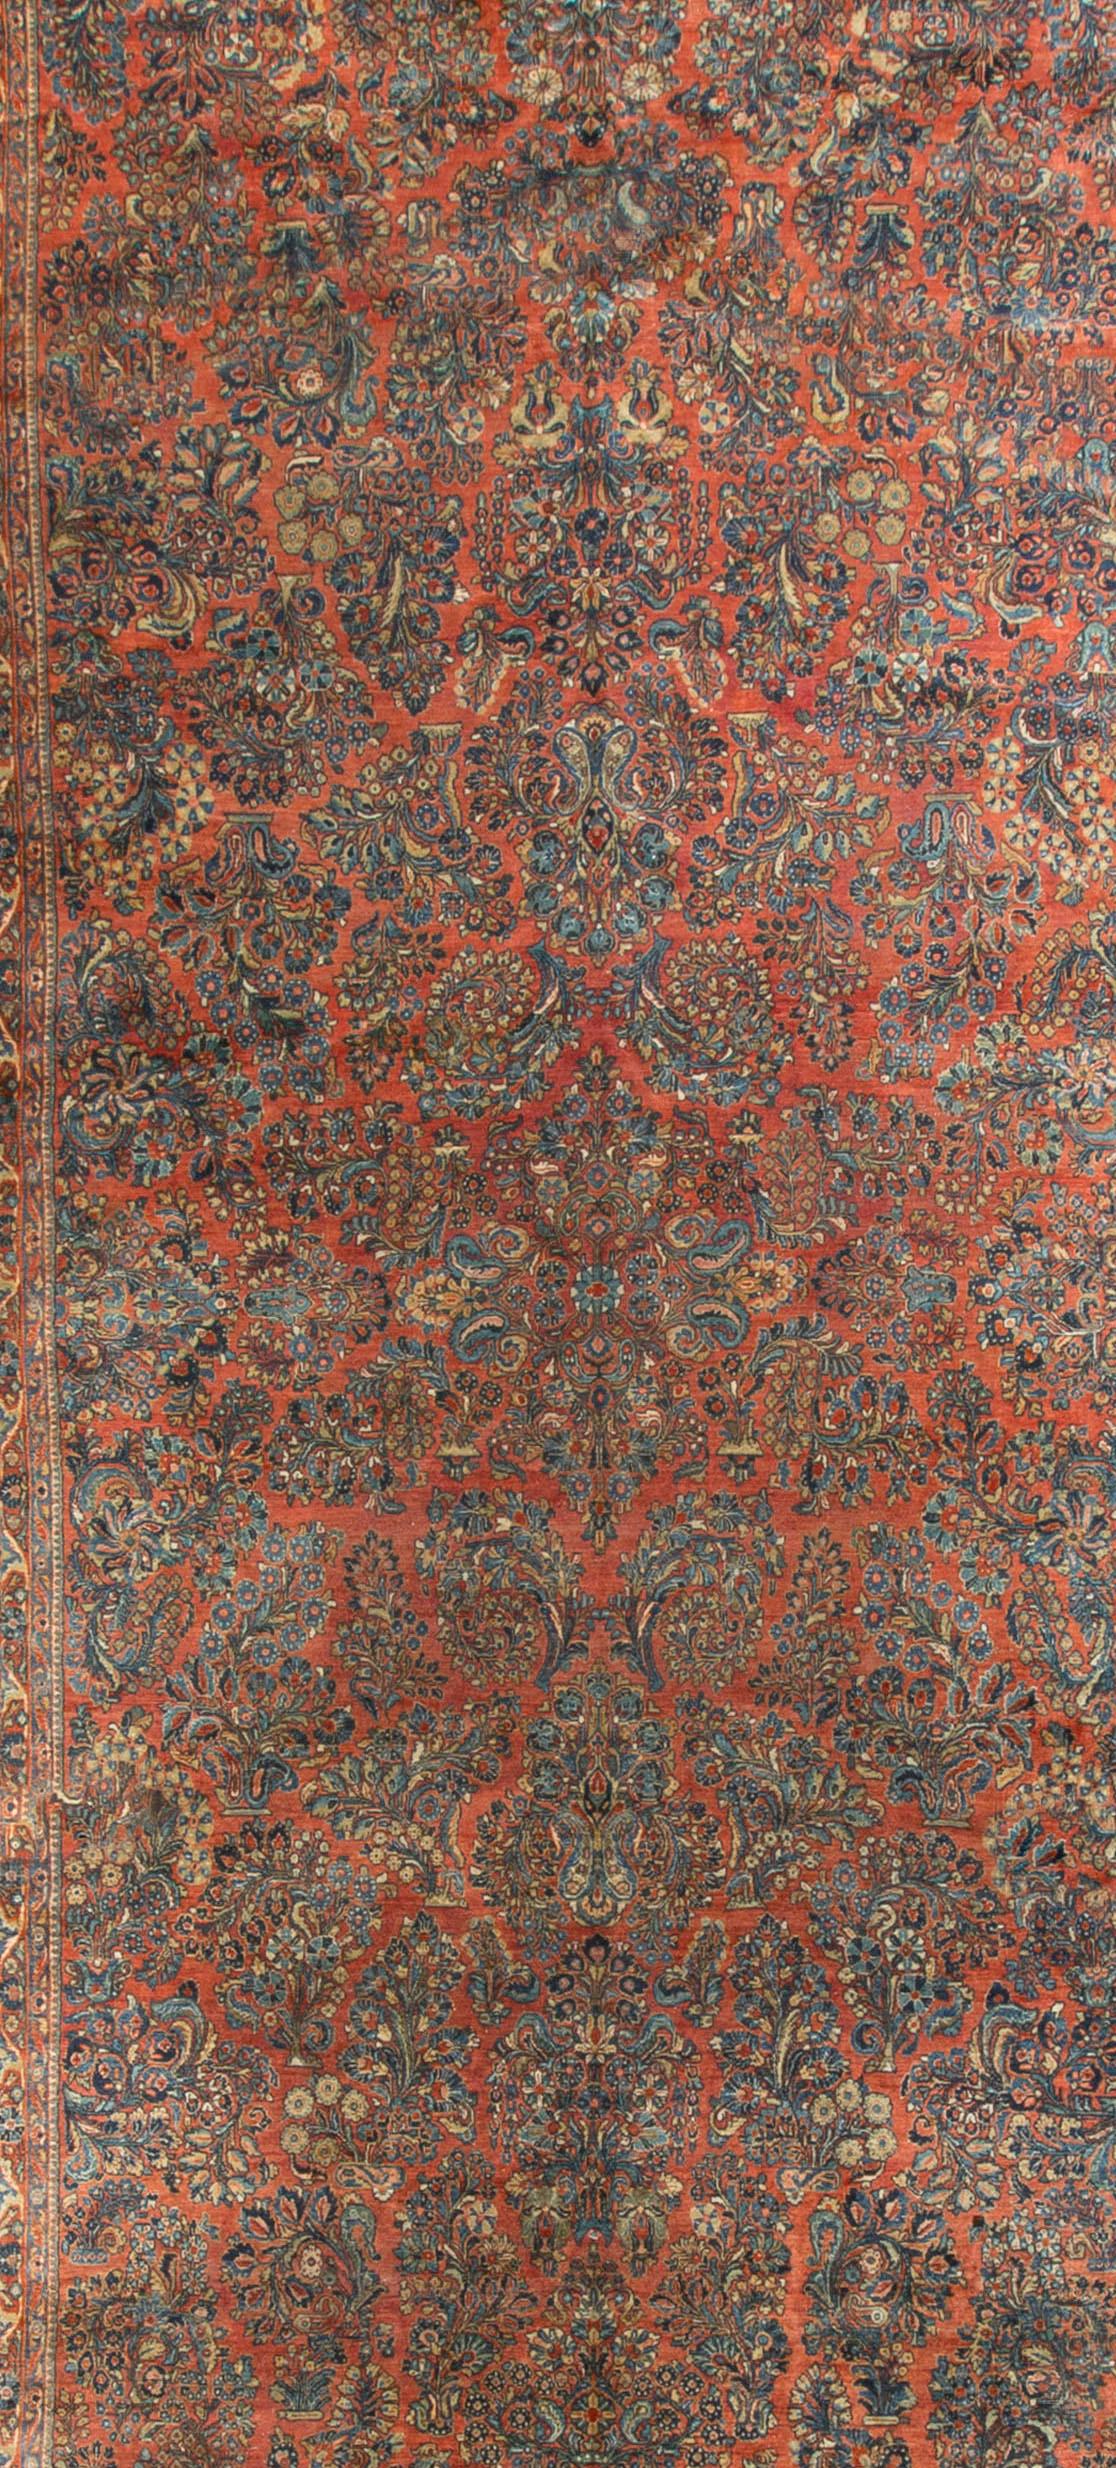 Hand-Woven Antique Oversize Persian Sarouk Rug, circa 1900 10' x 21'6 For Sale